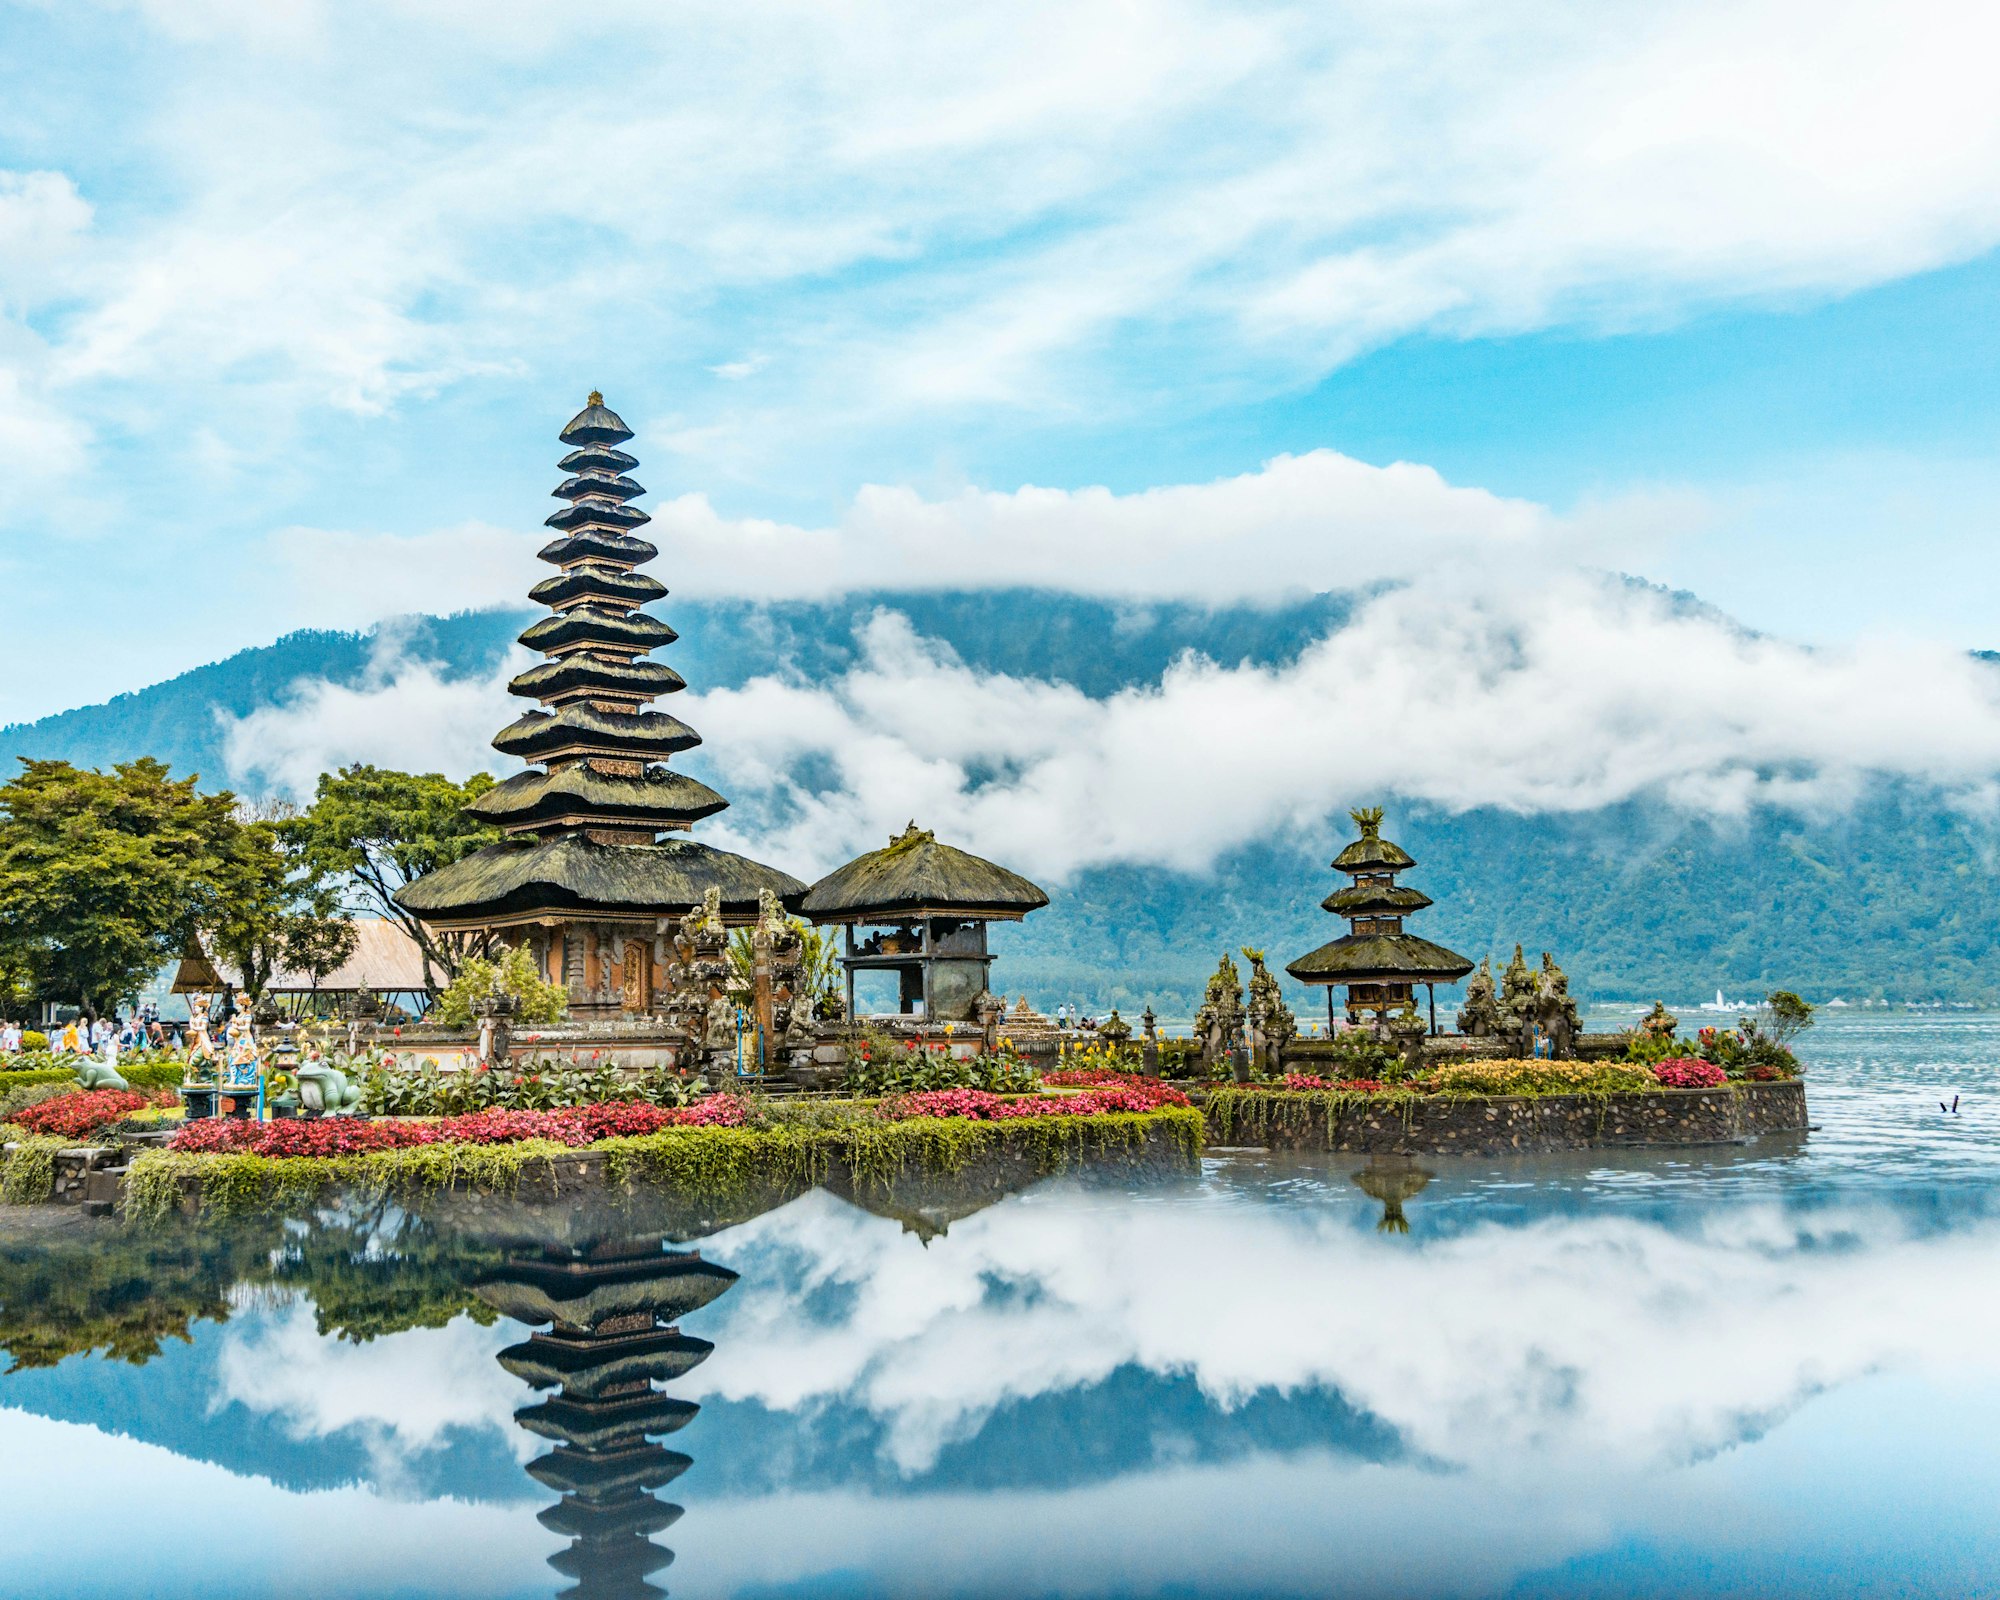 Lake view of Asian pagoda in Bali, Indonesia